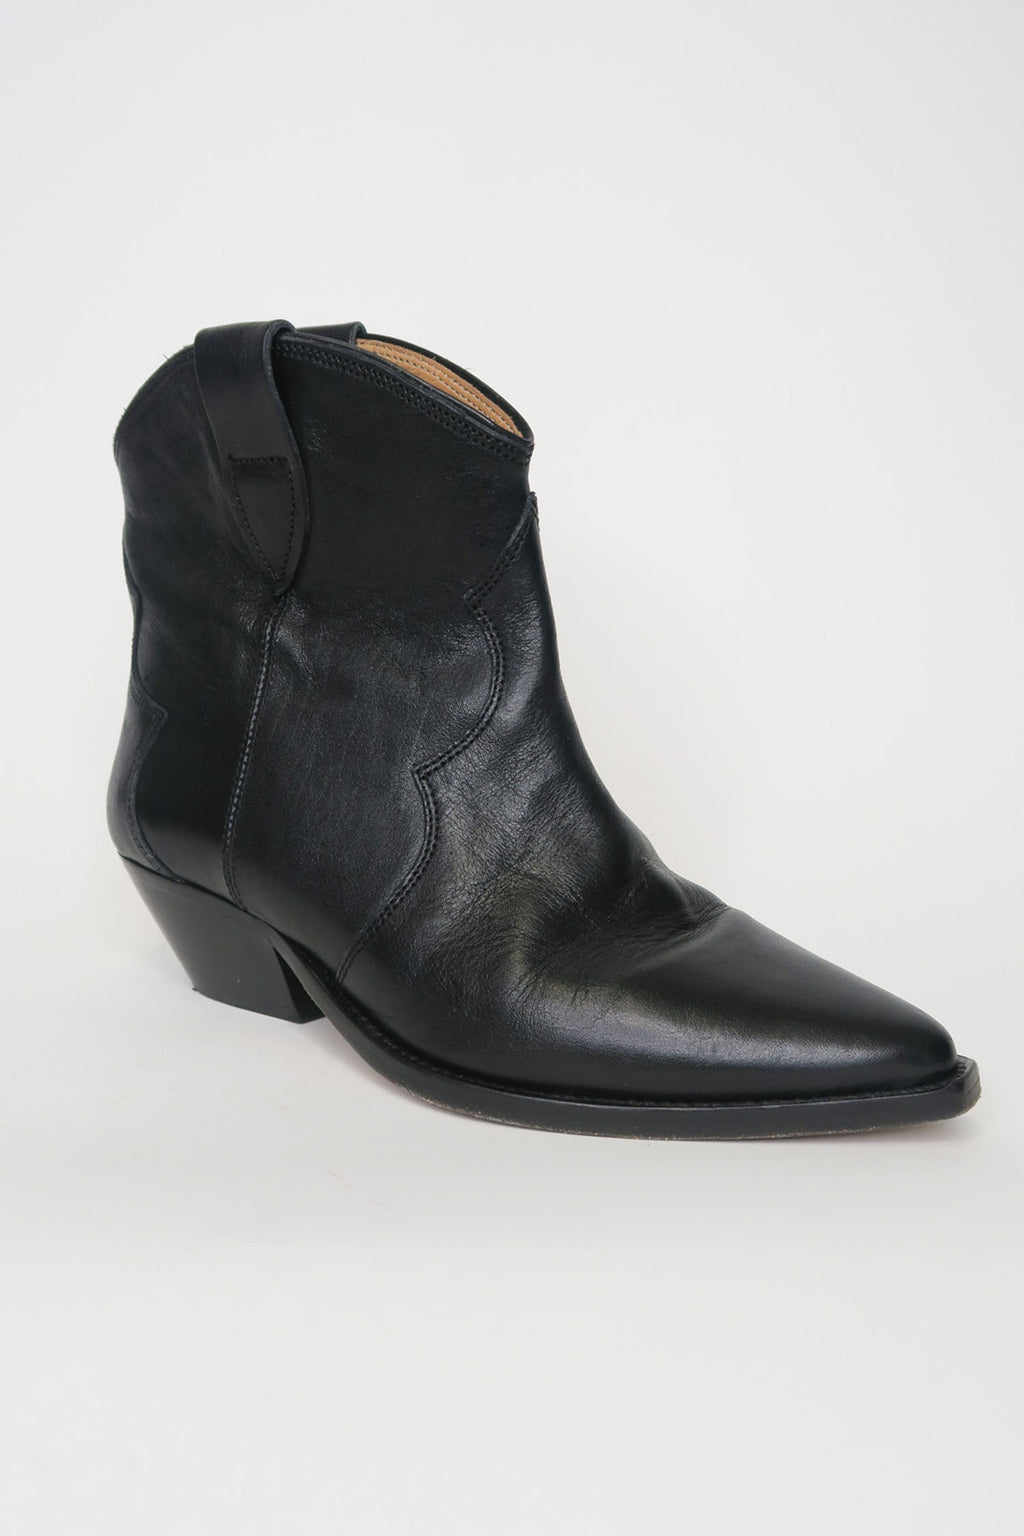 Isabel Marant Leather Western Boots sz 38